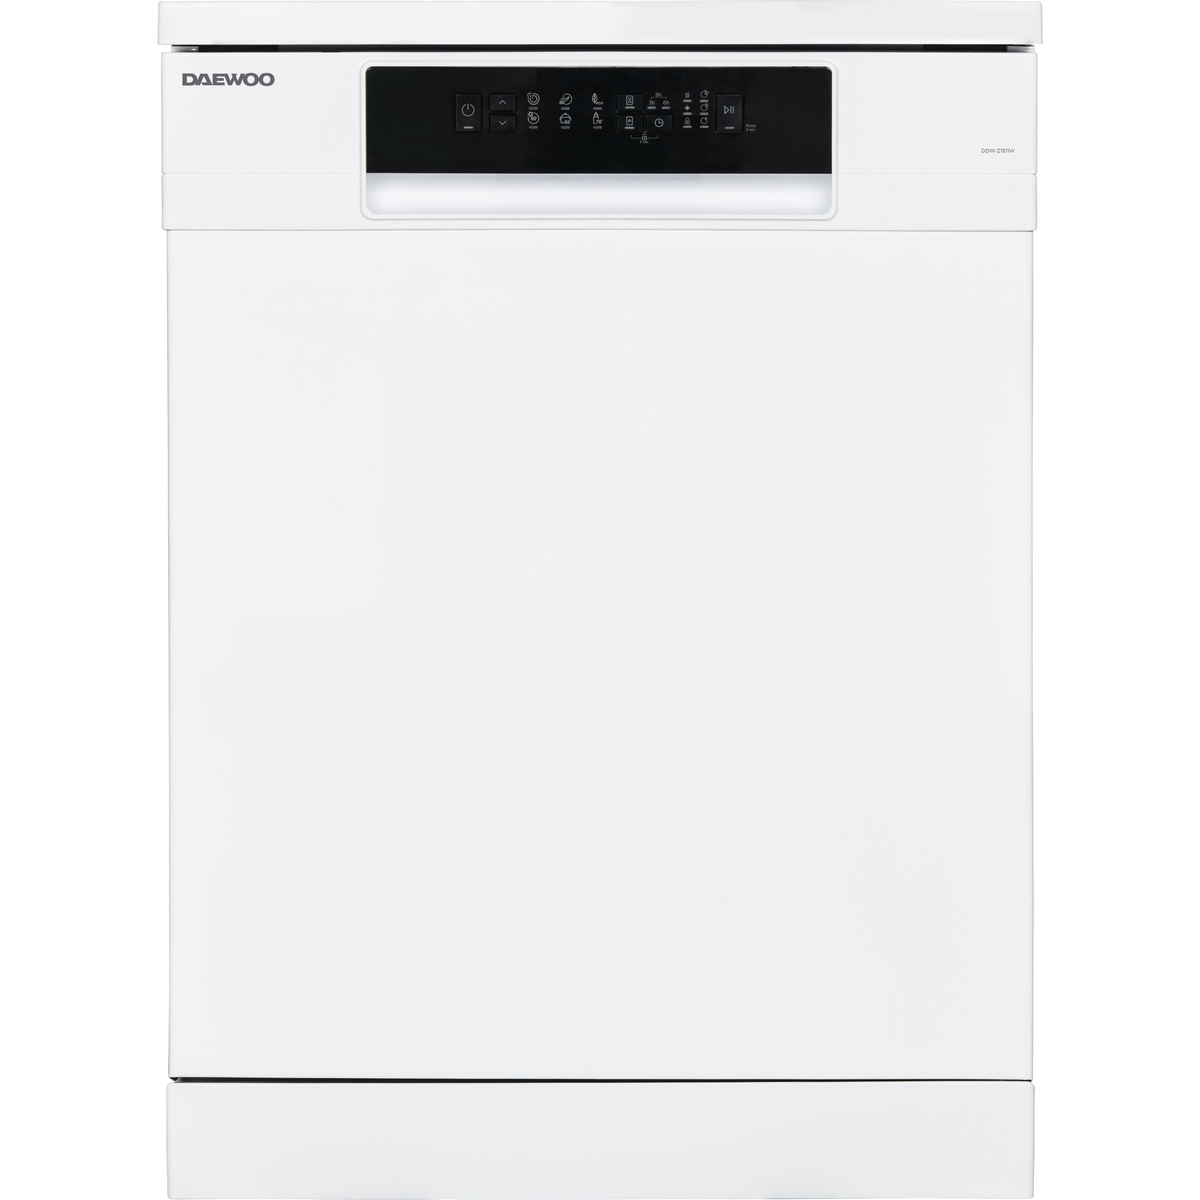 Daewoo Free Standing Dishwasher With 6 Washing Programs, 15 Place Setting, White, DDW-Z1511W